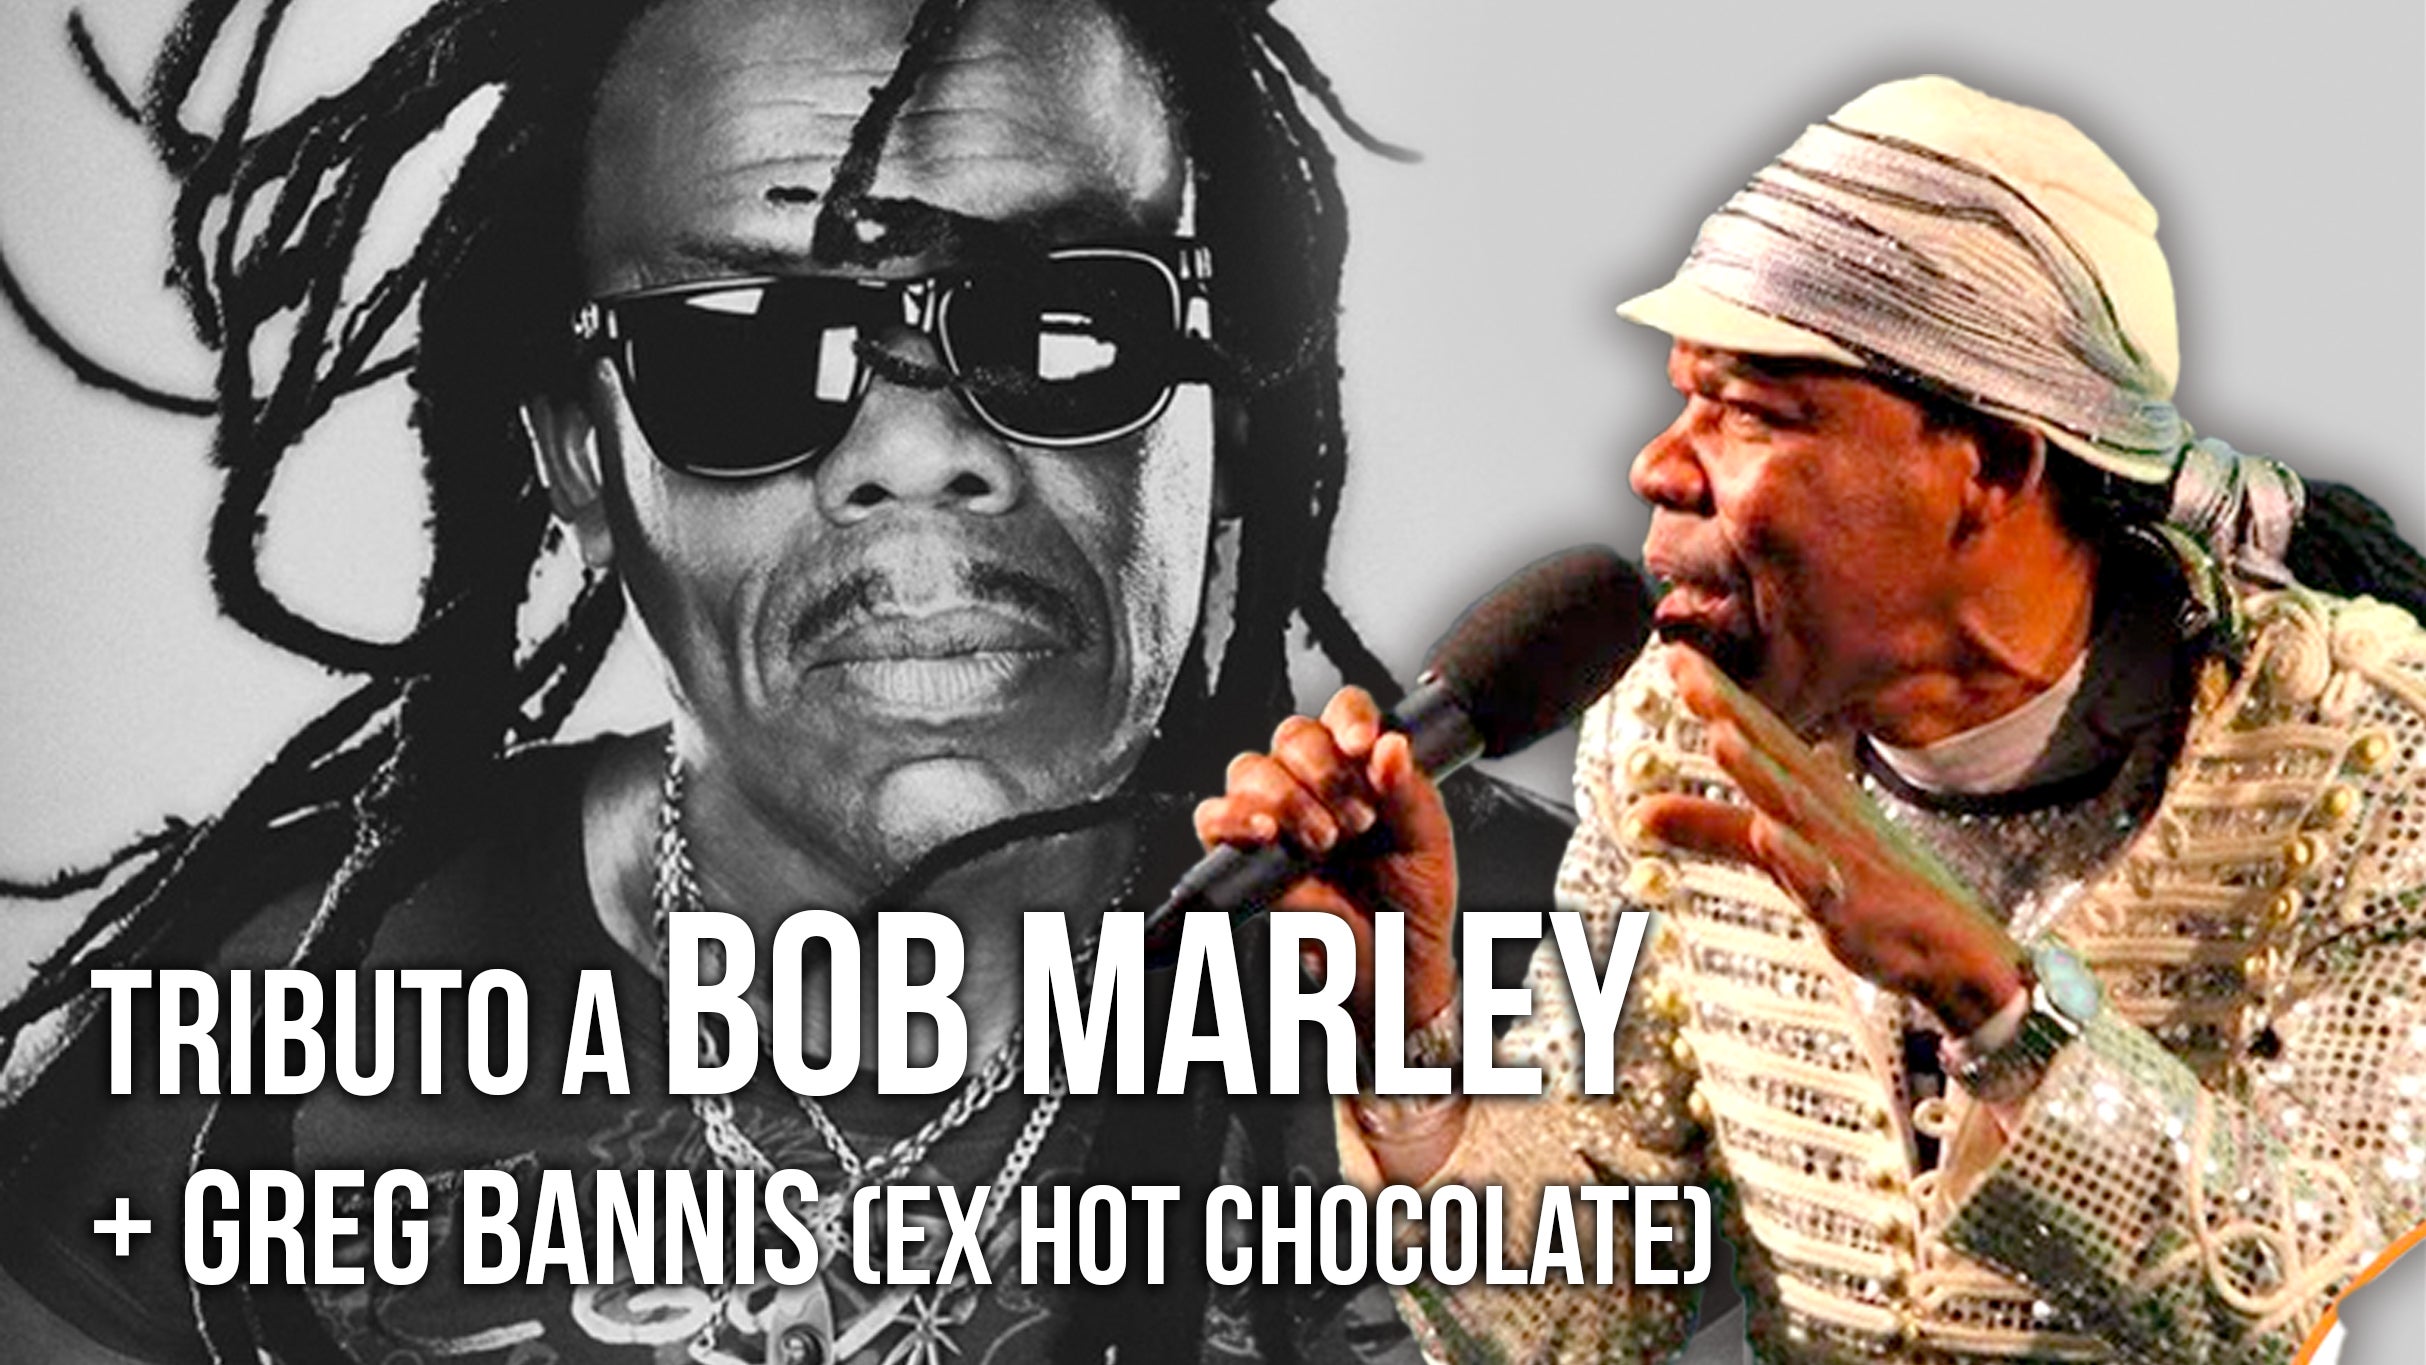 Tributo a Bob Marley con Greg Bannis presale information on freepresalepasswords.com